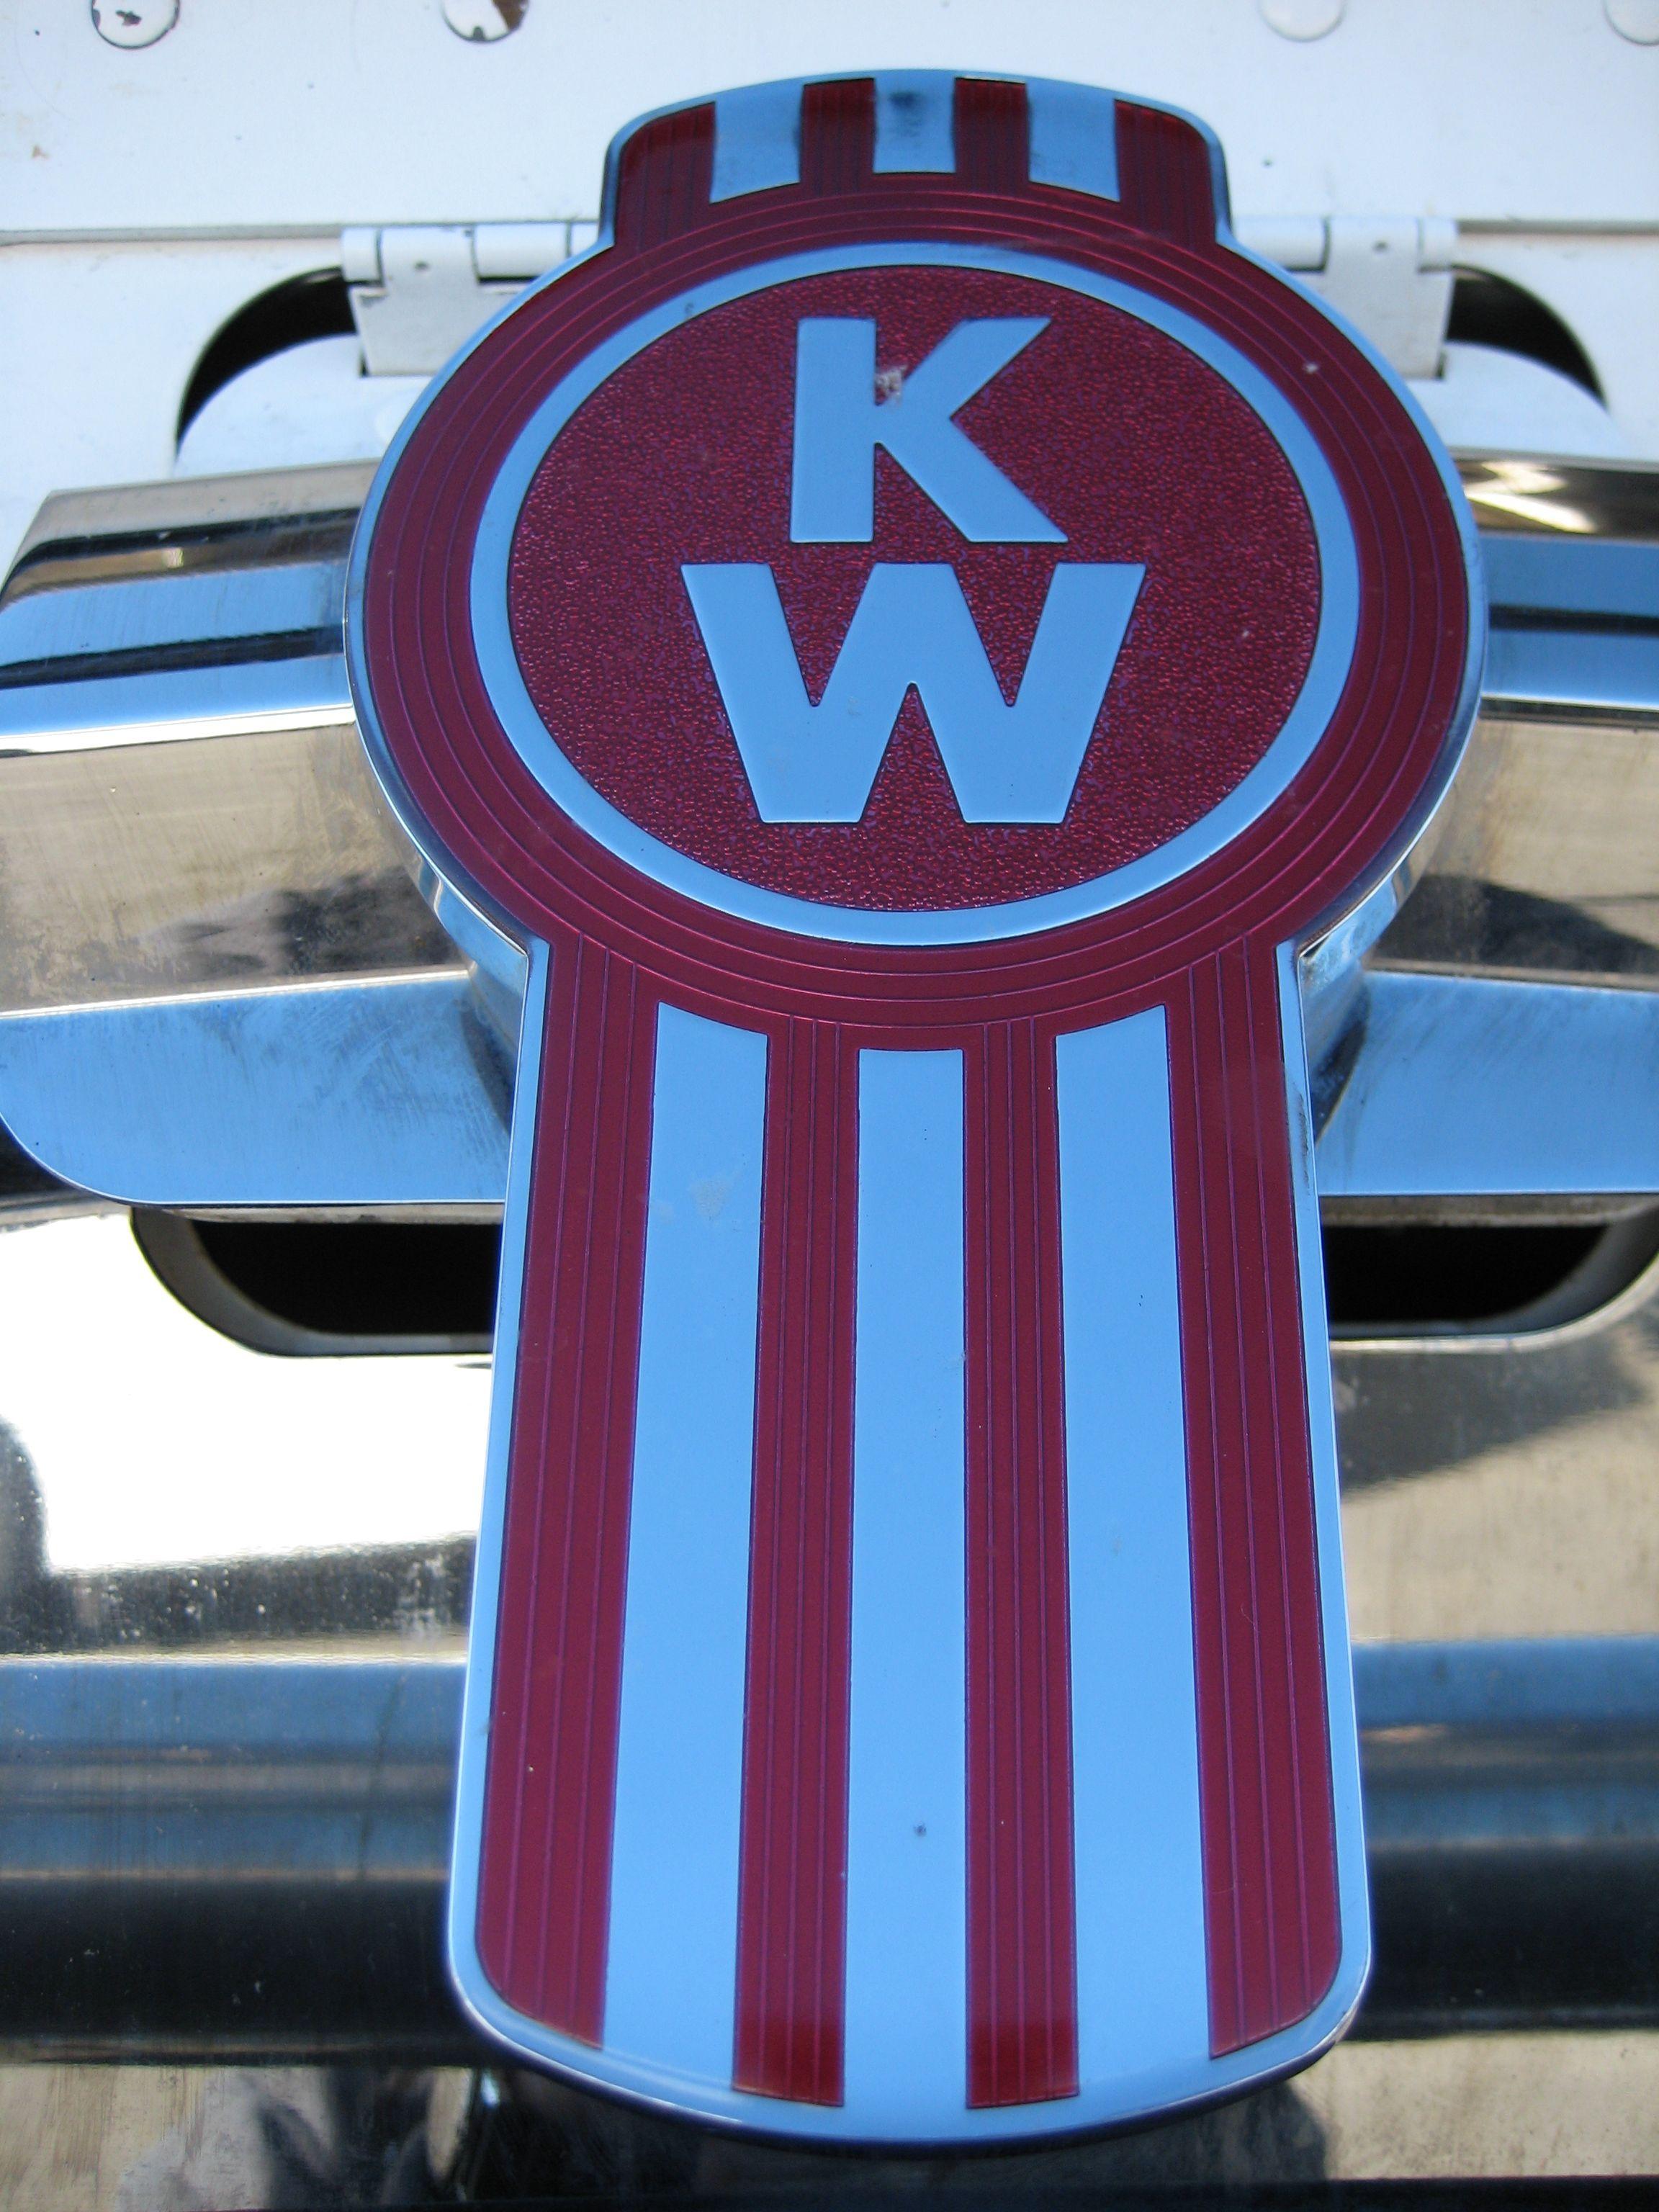 Kenworth Grill Logo - Kenworth | Tractor & Construction Plant Wiki | FANDOM powered by Wikia